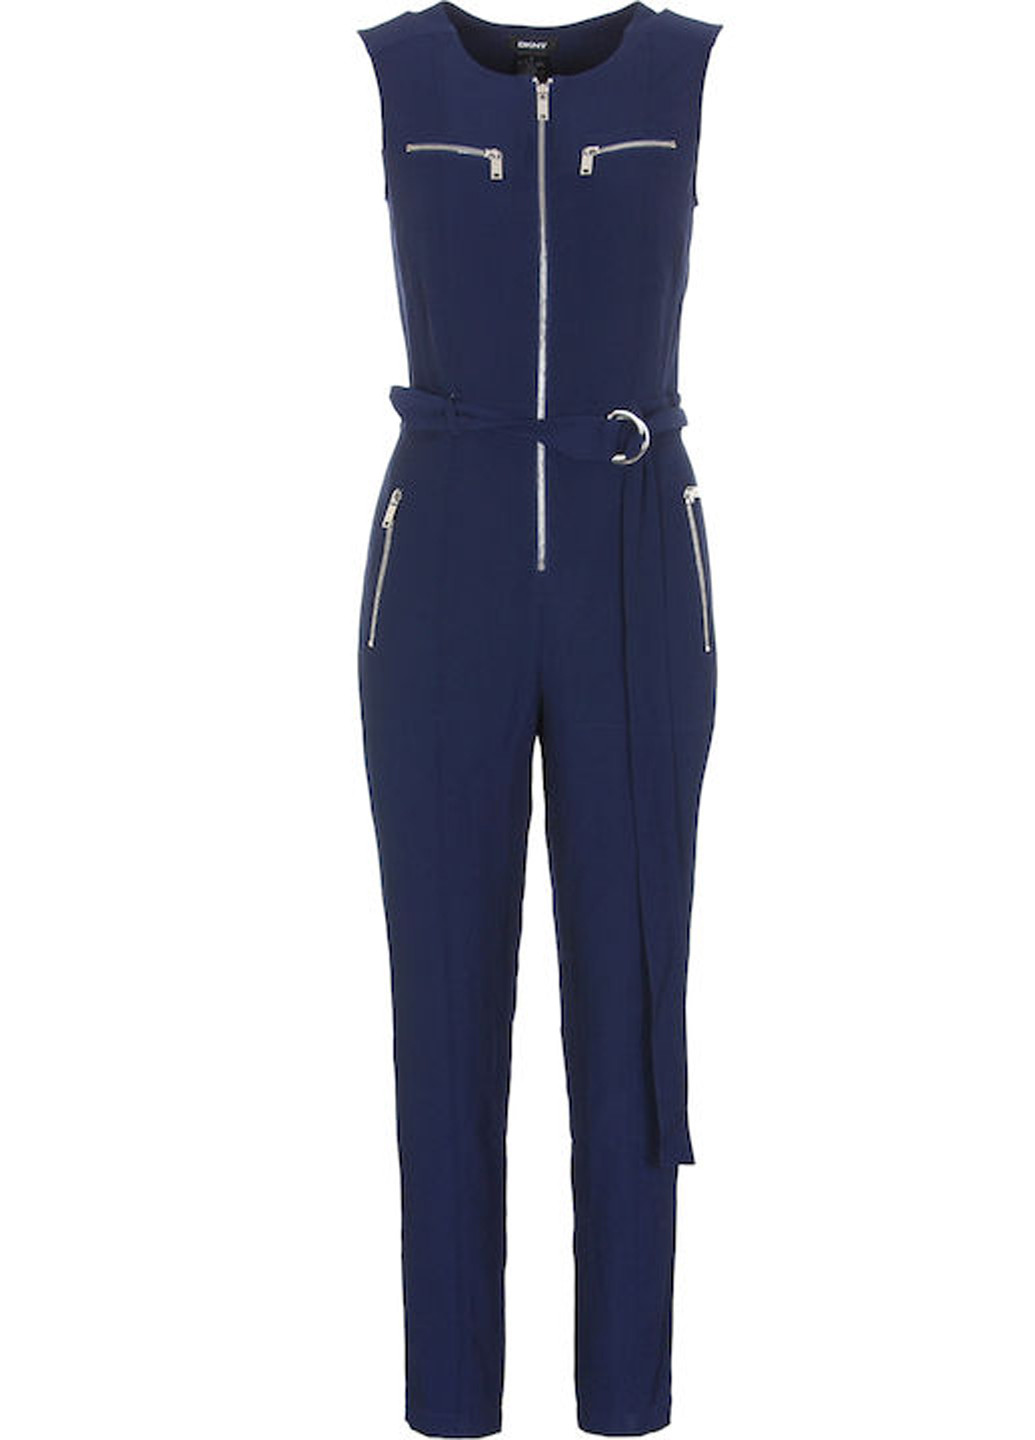 Комбинезон DKNY комбинезон-брюки однотонный тёмно-синий кэжуал полиэстер